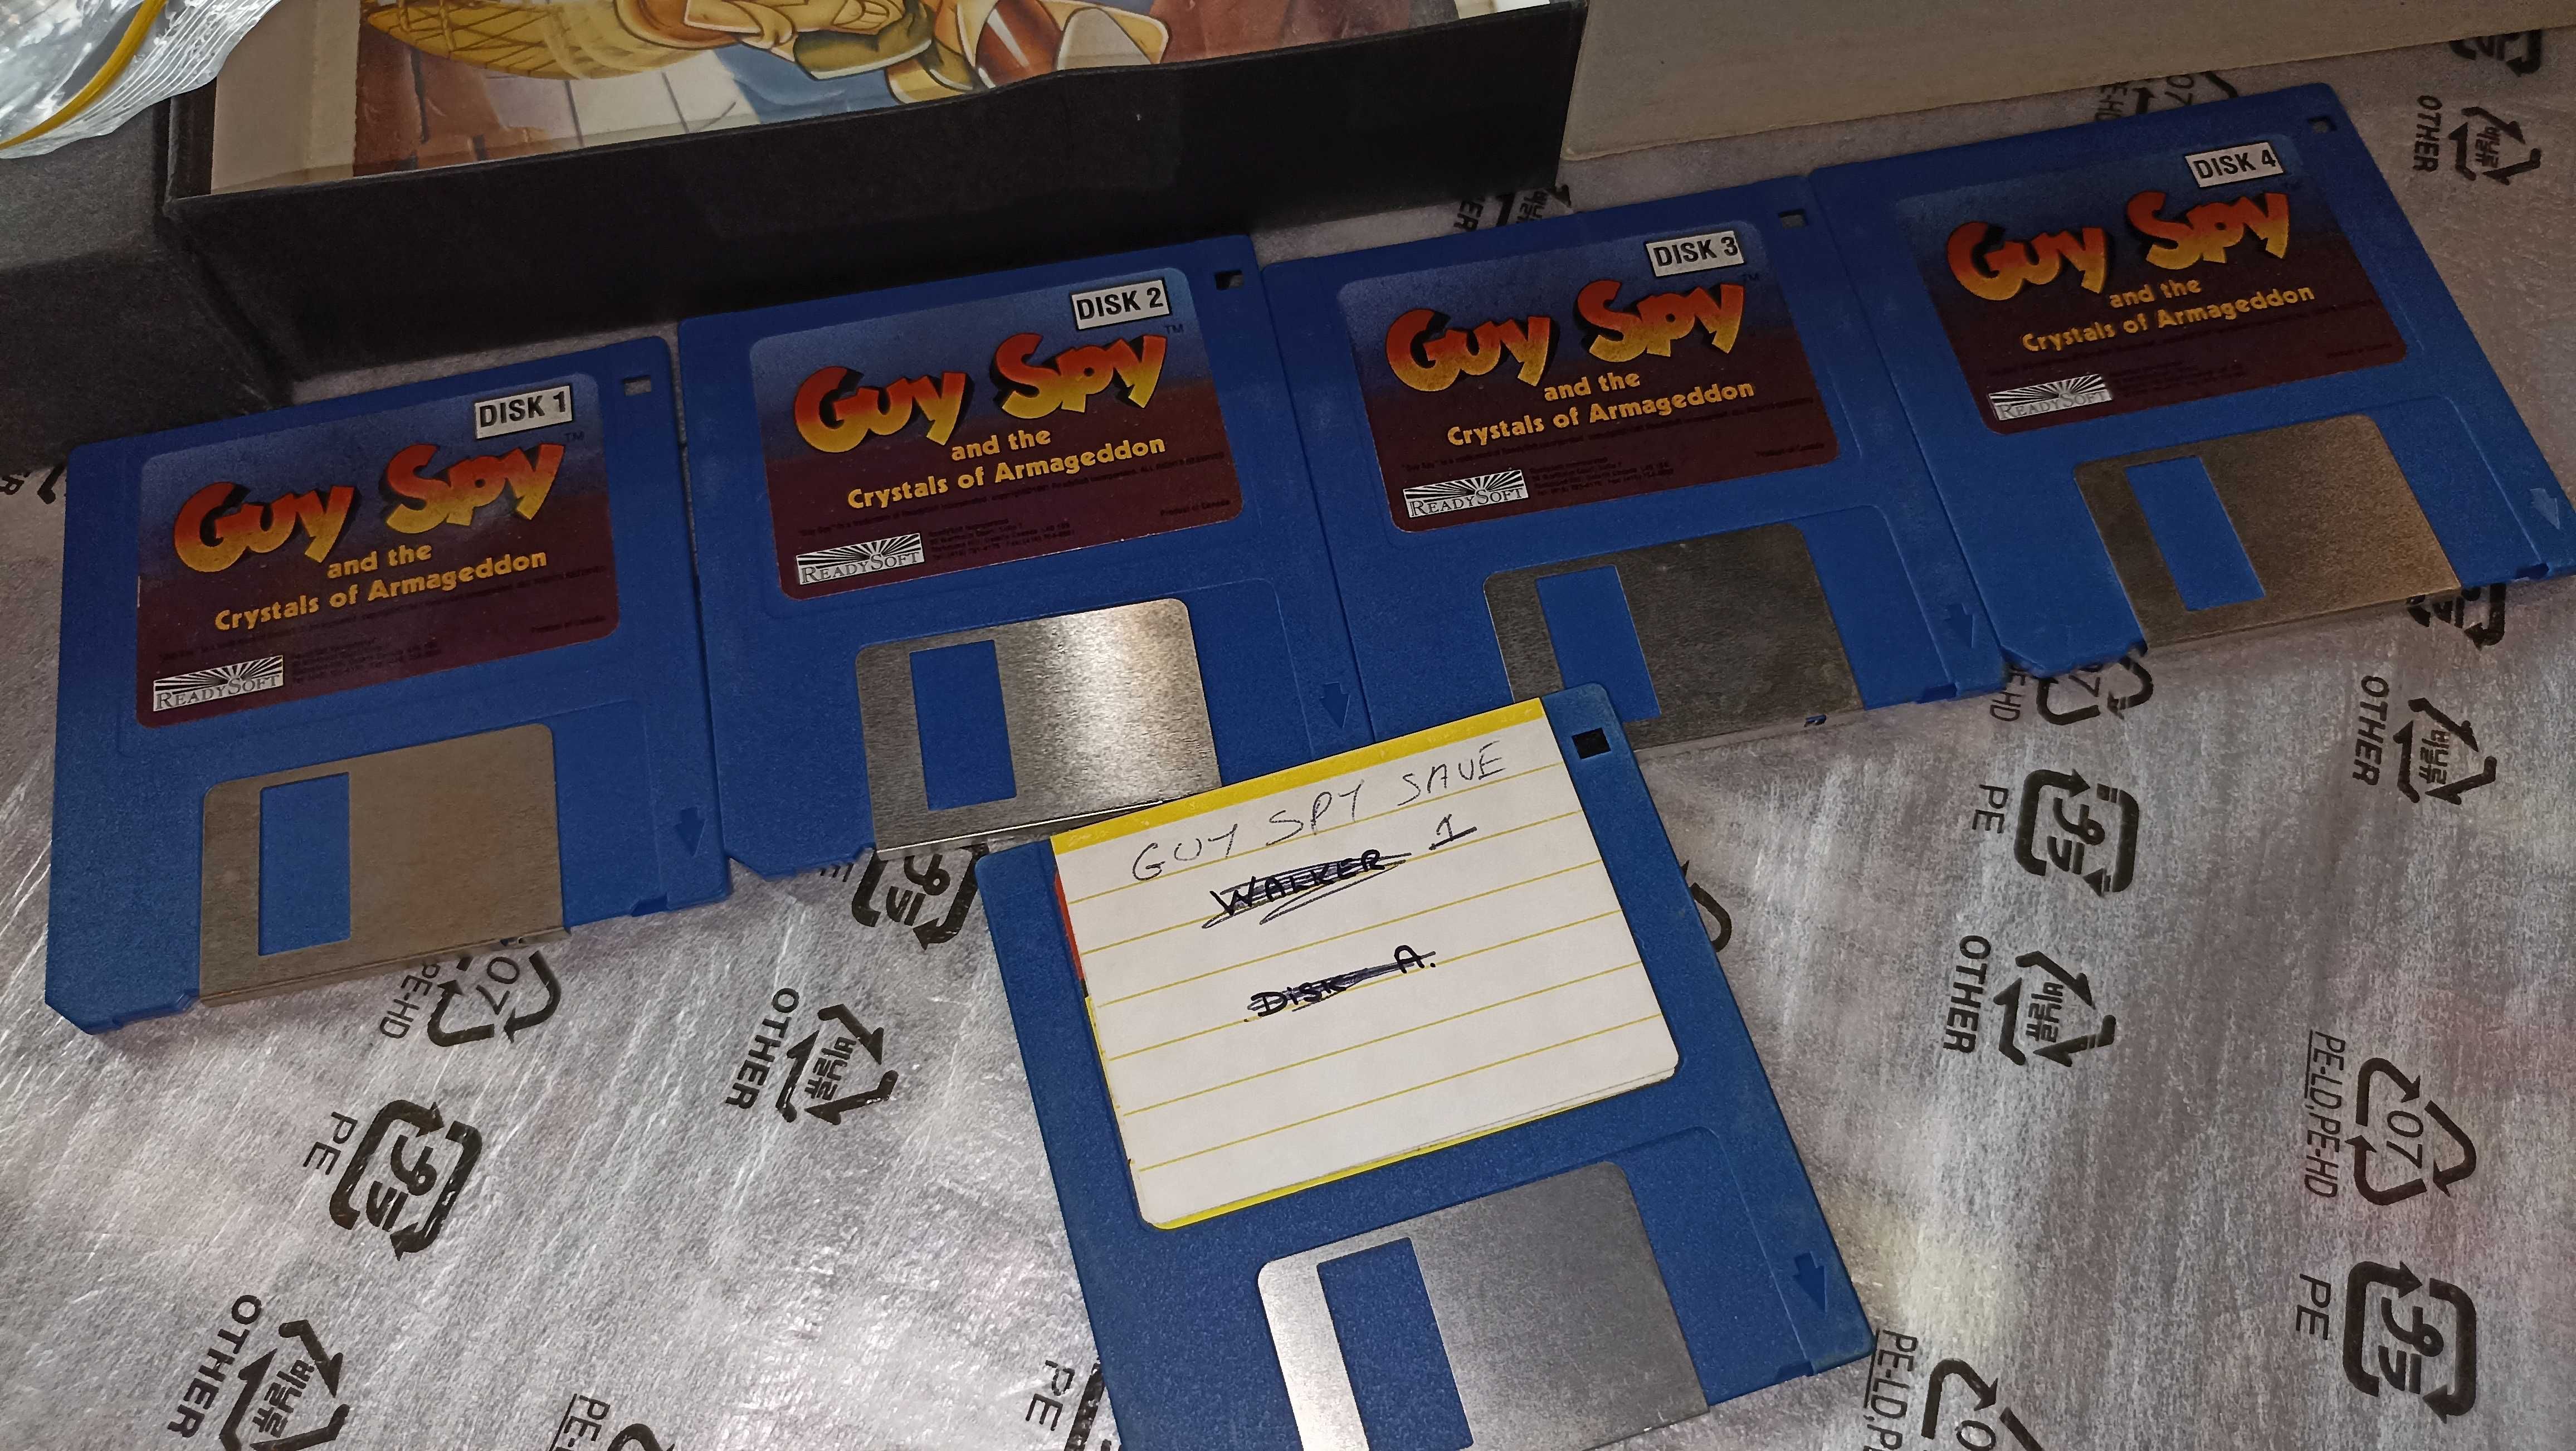 Guy Spy 1991 Amiga gra dla kolekcjonera SKLEP